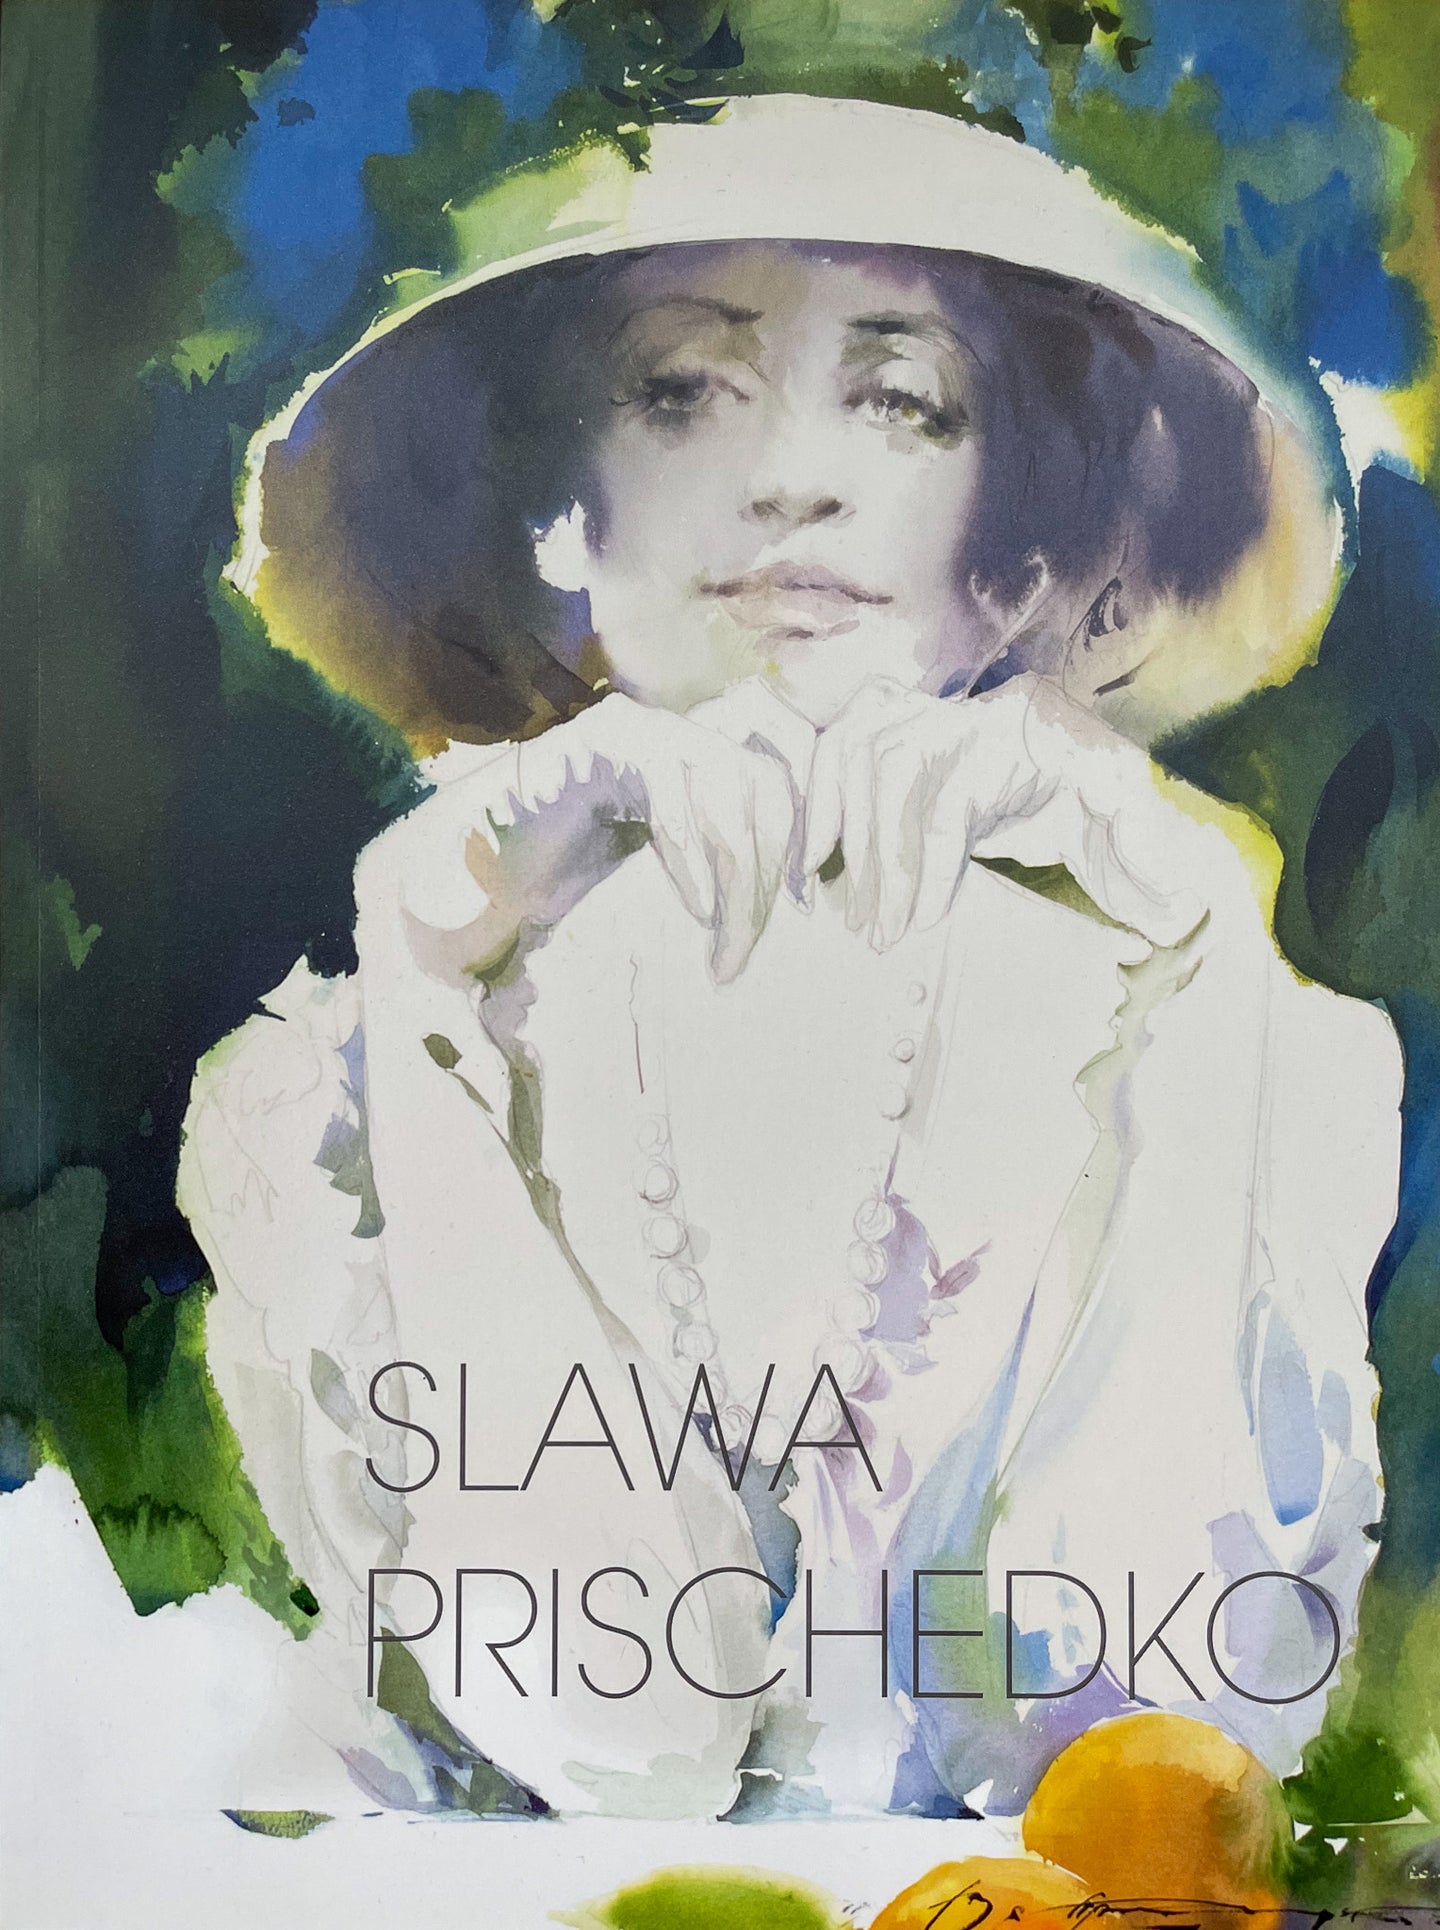 Slawa Prischedko – artist catalog